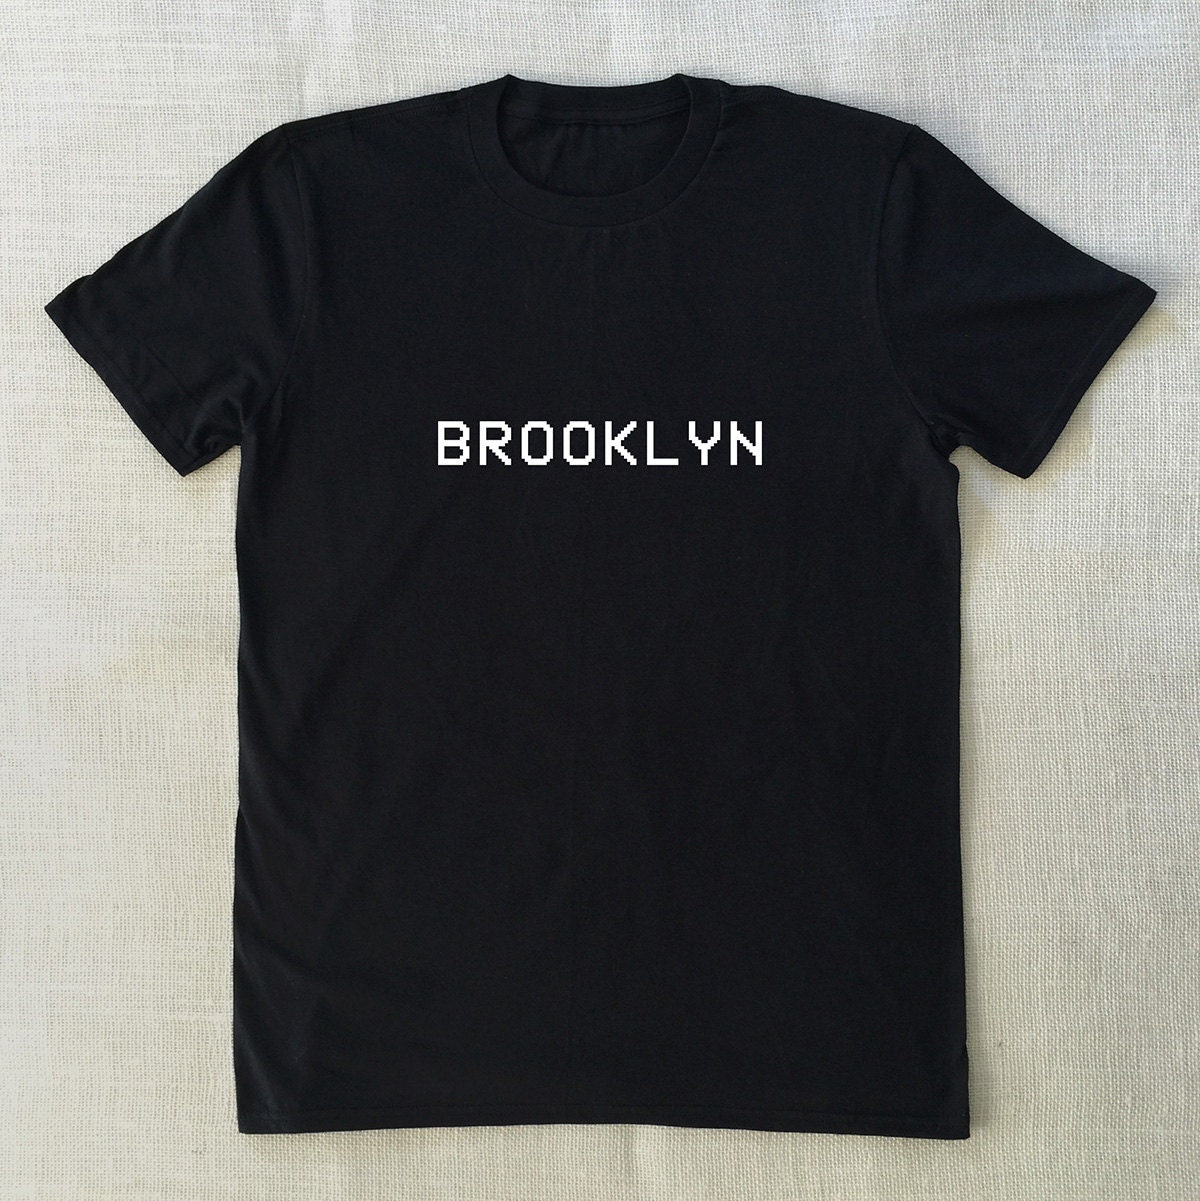 Brooklyn T-Shirt Unisex Graphic Tee S M L XL Style Shirt